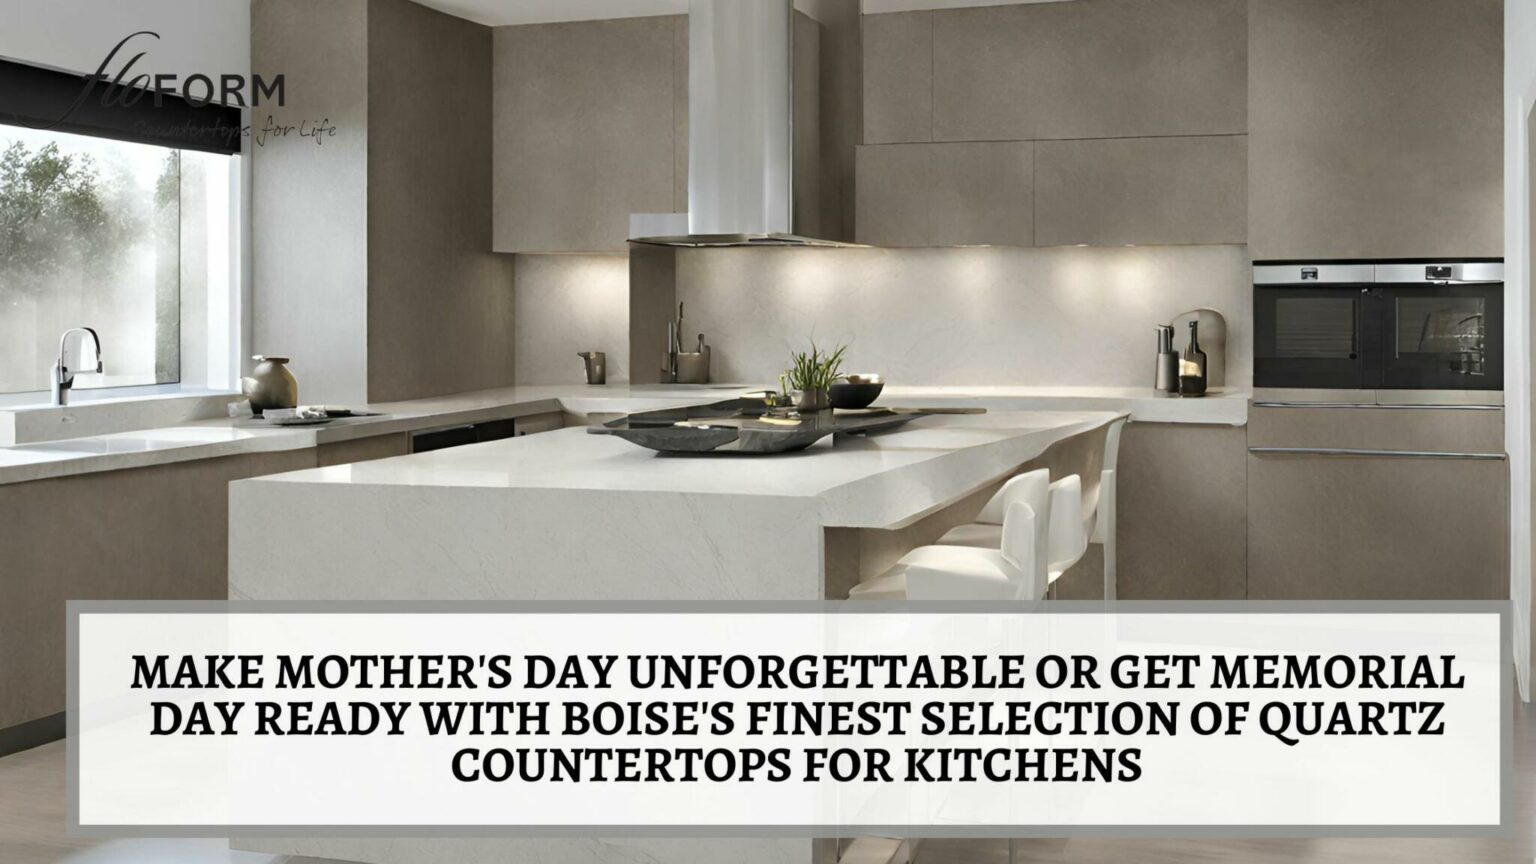 Quartz countertops for kitchens in Boise